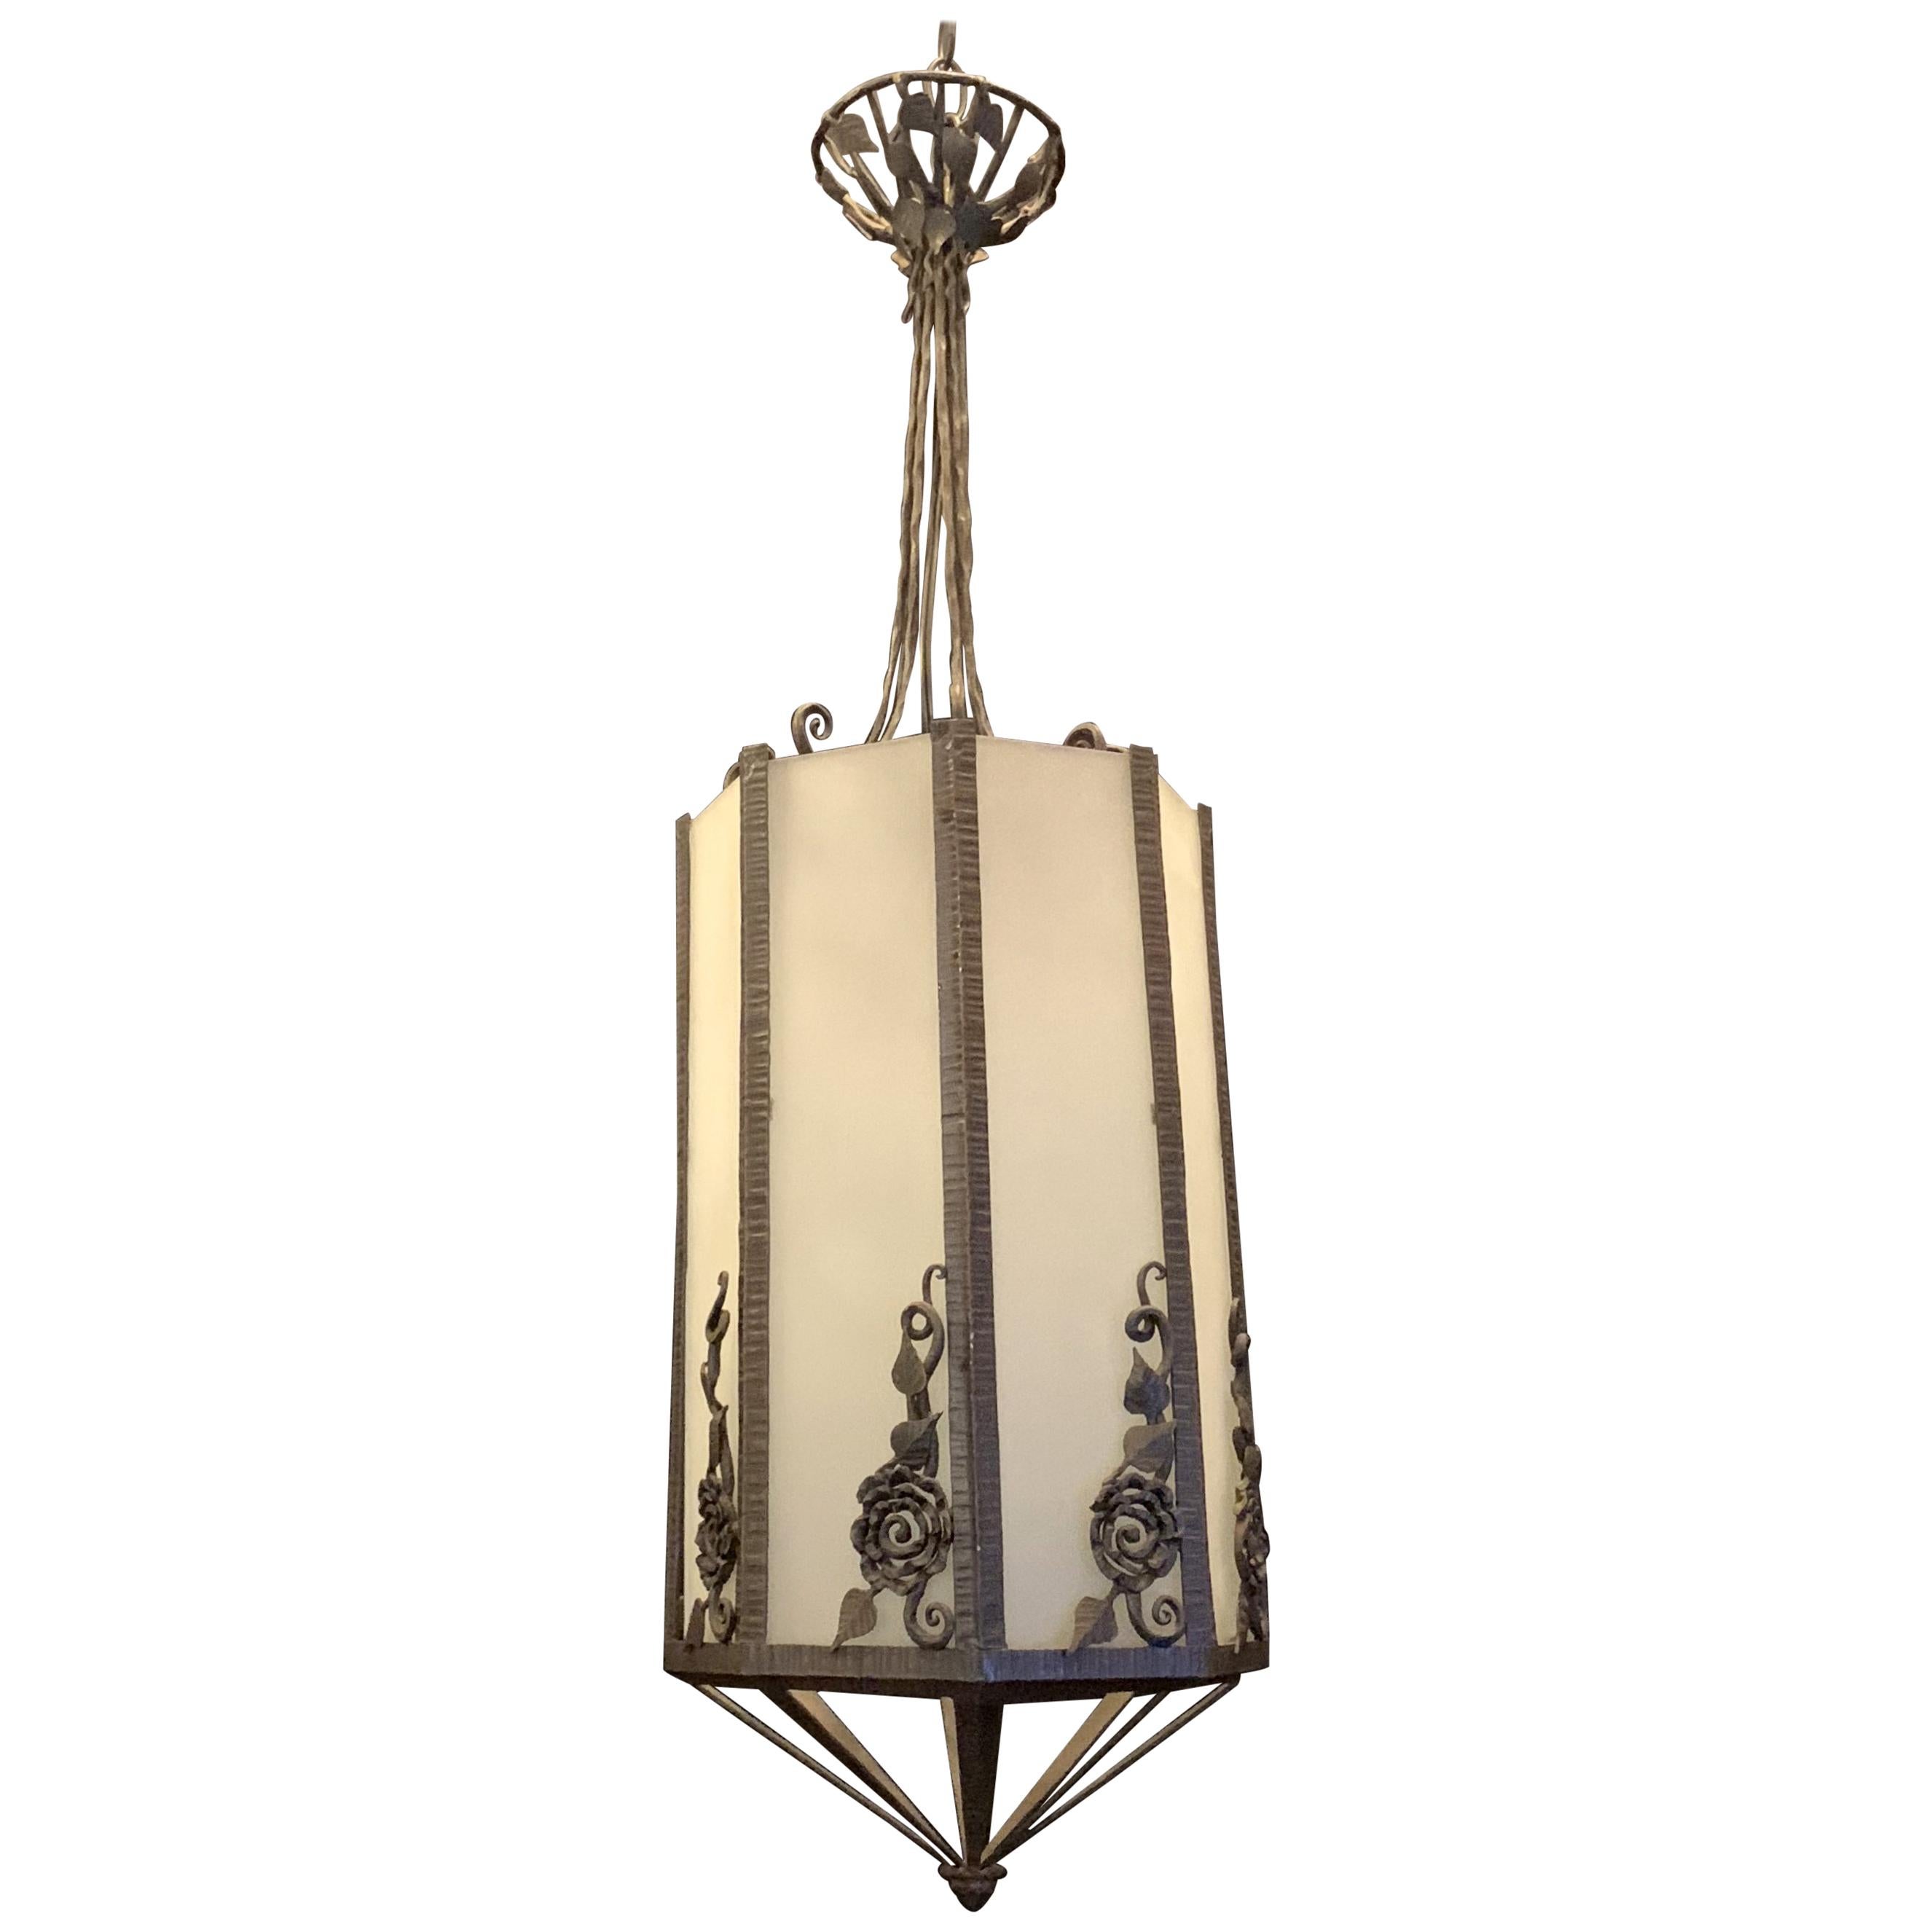 Wonderful Art Deco Edgar Brandt Scroll Flower Iron Frosted Glass Lantern Fixture